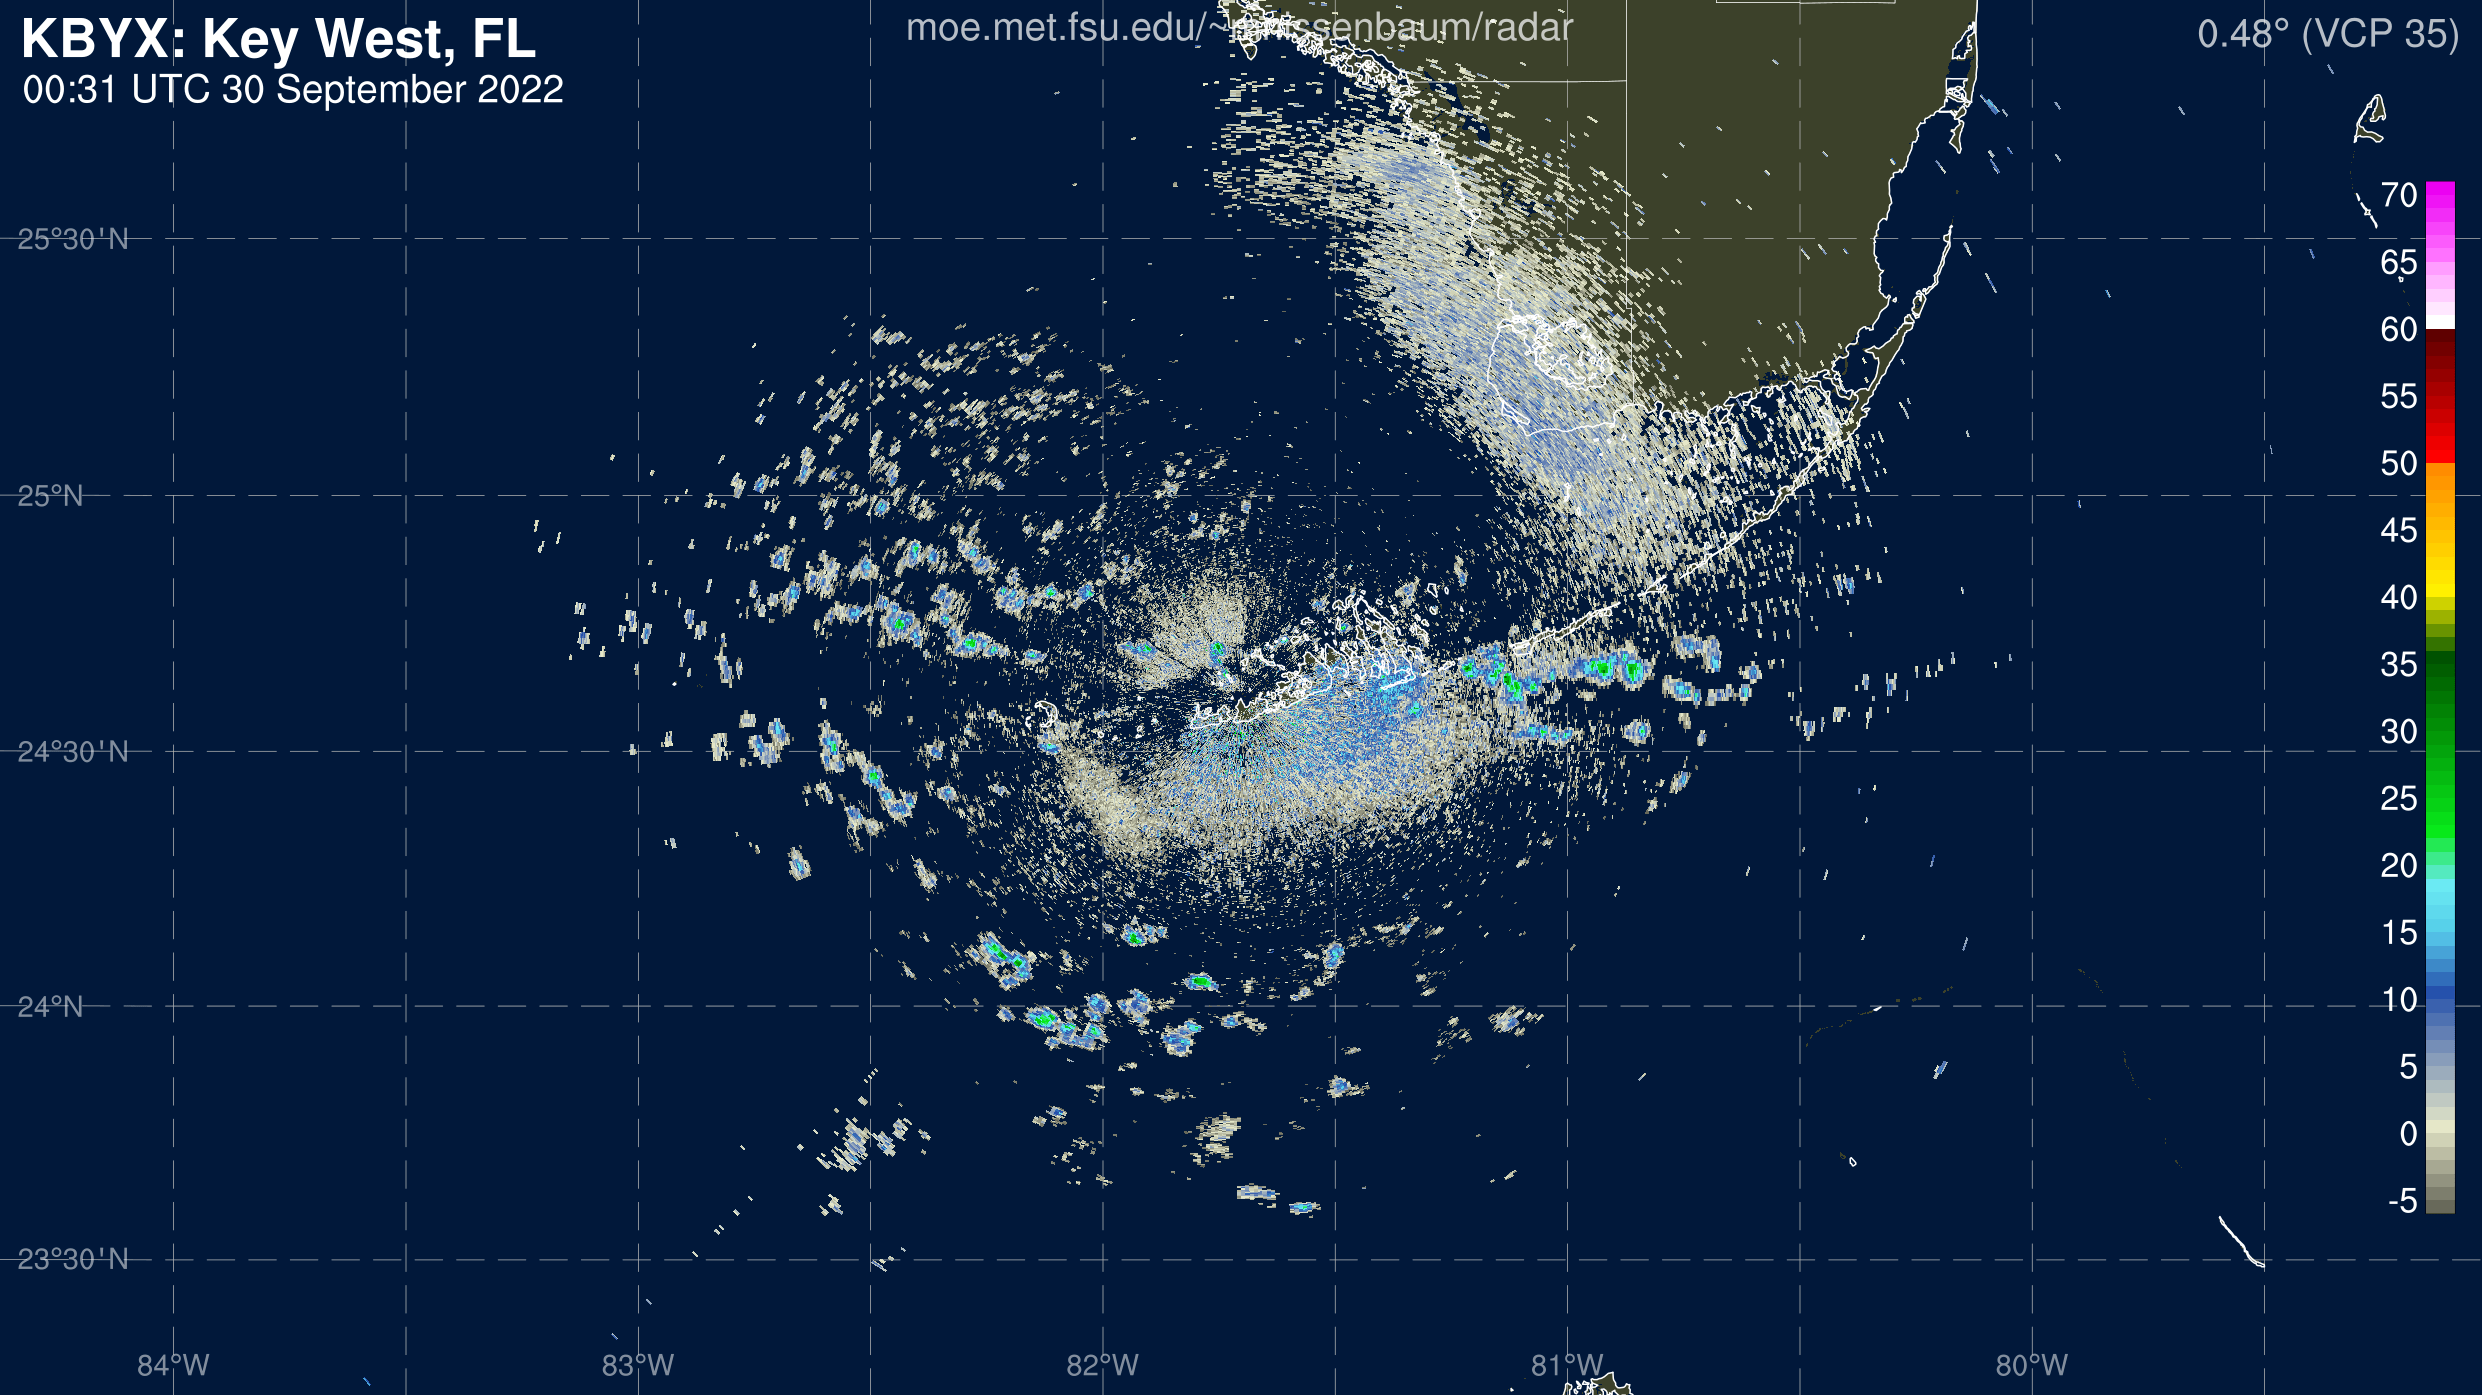 Key West Radar Recording of Ian (2022) Approach